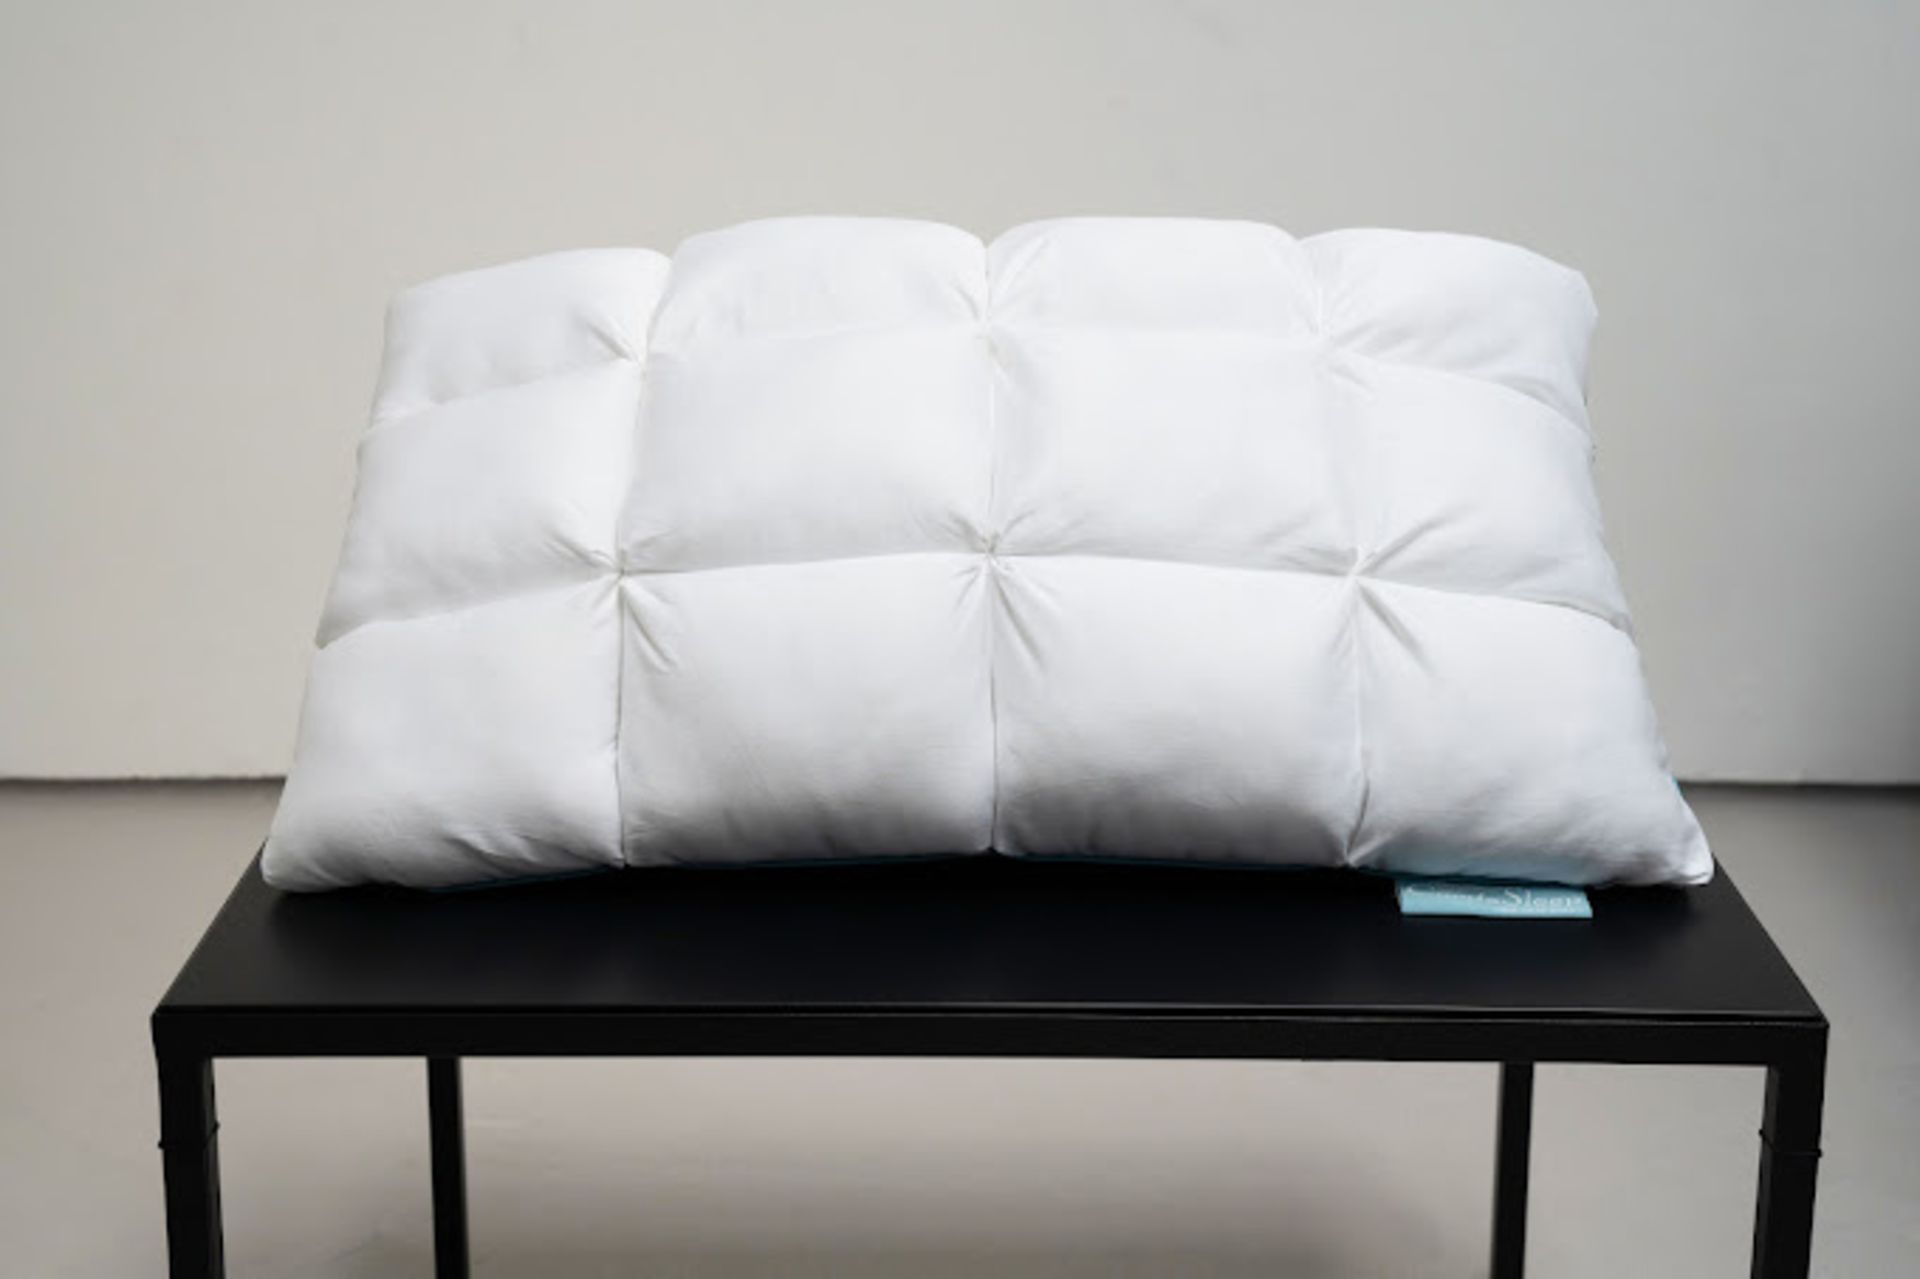 2 x ComfaSleep PL0001 Pillows - Image 2 of 18